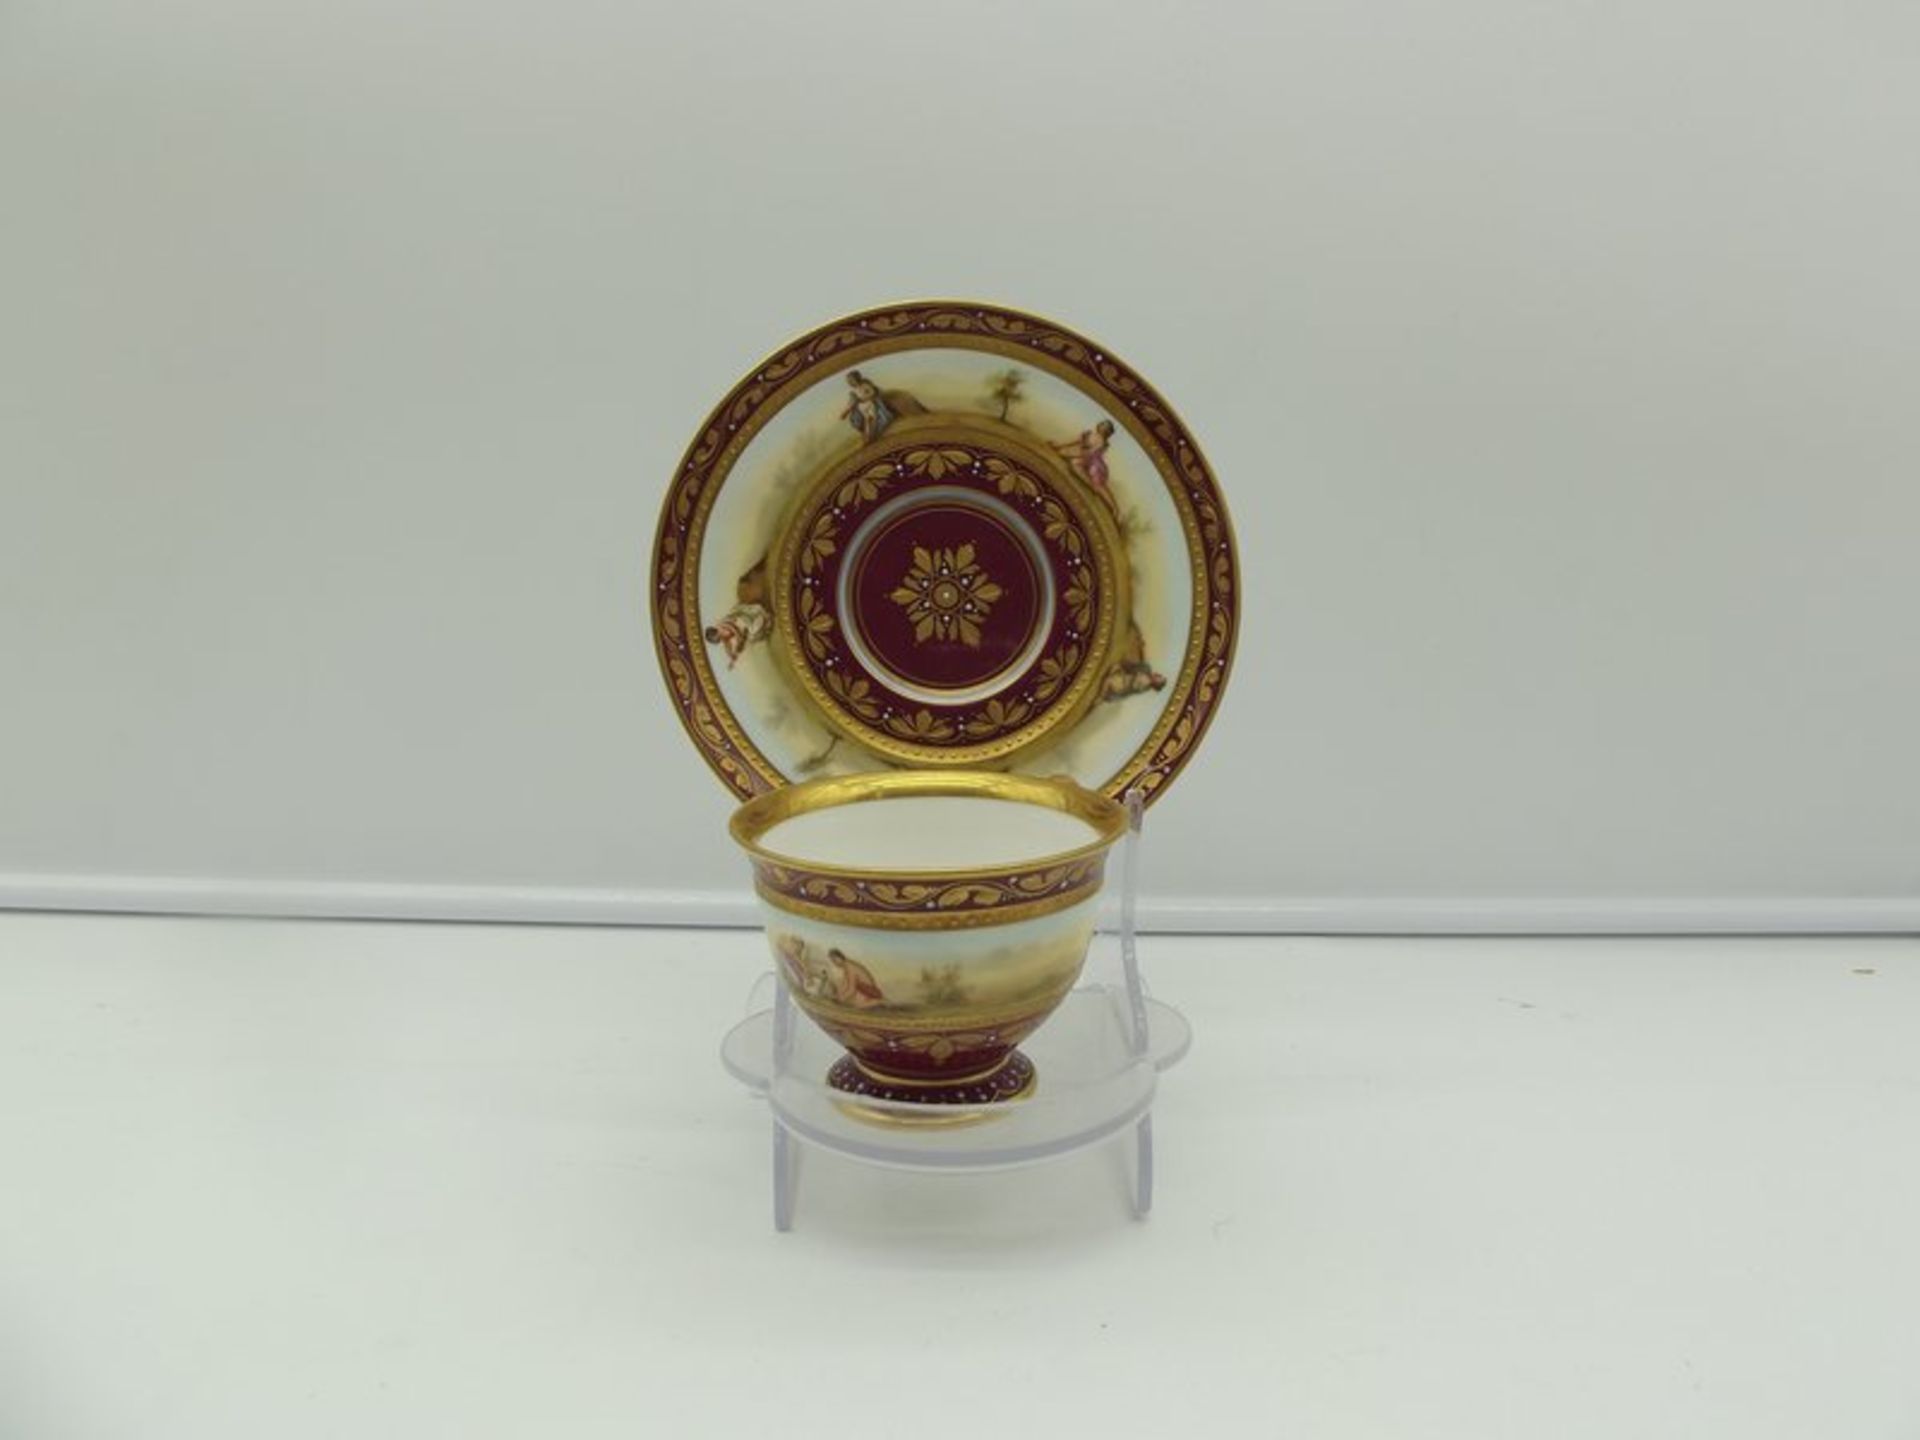 19th century Vienna porcelain cup